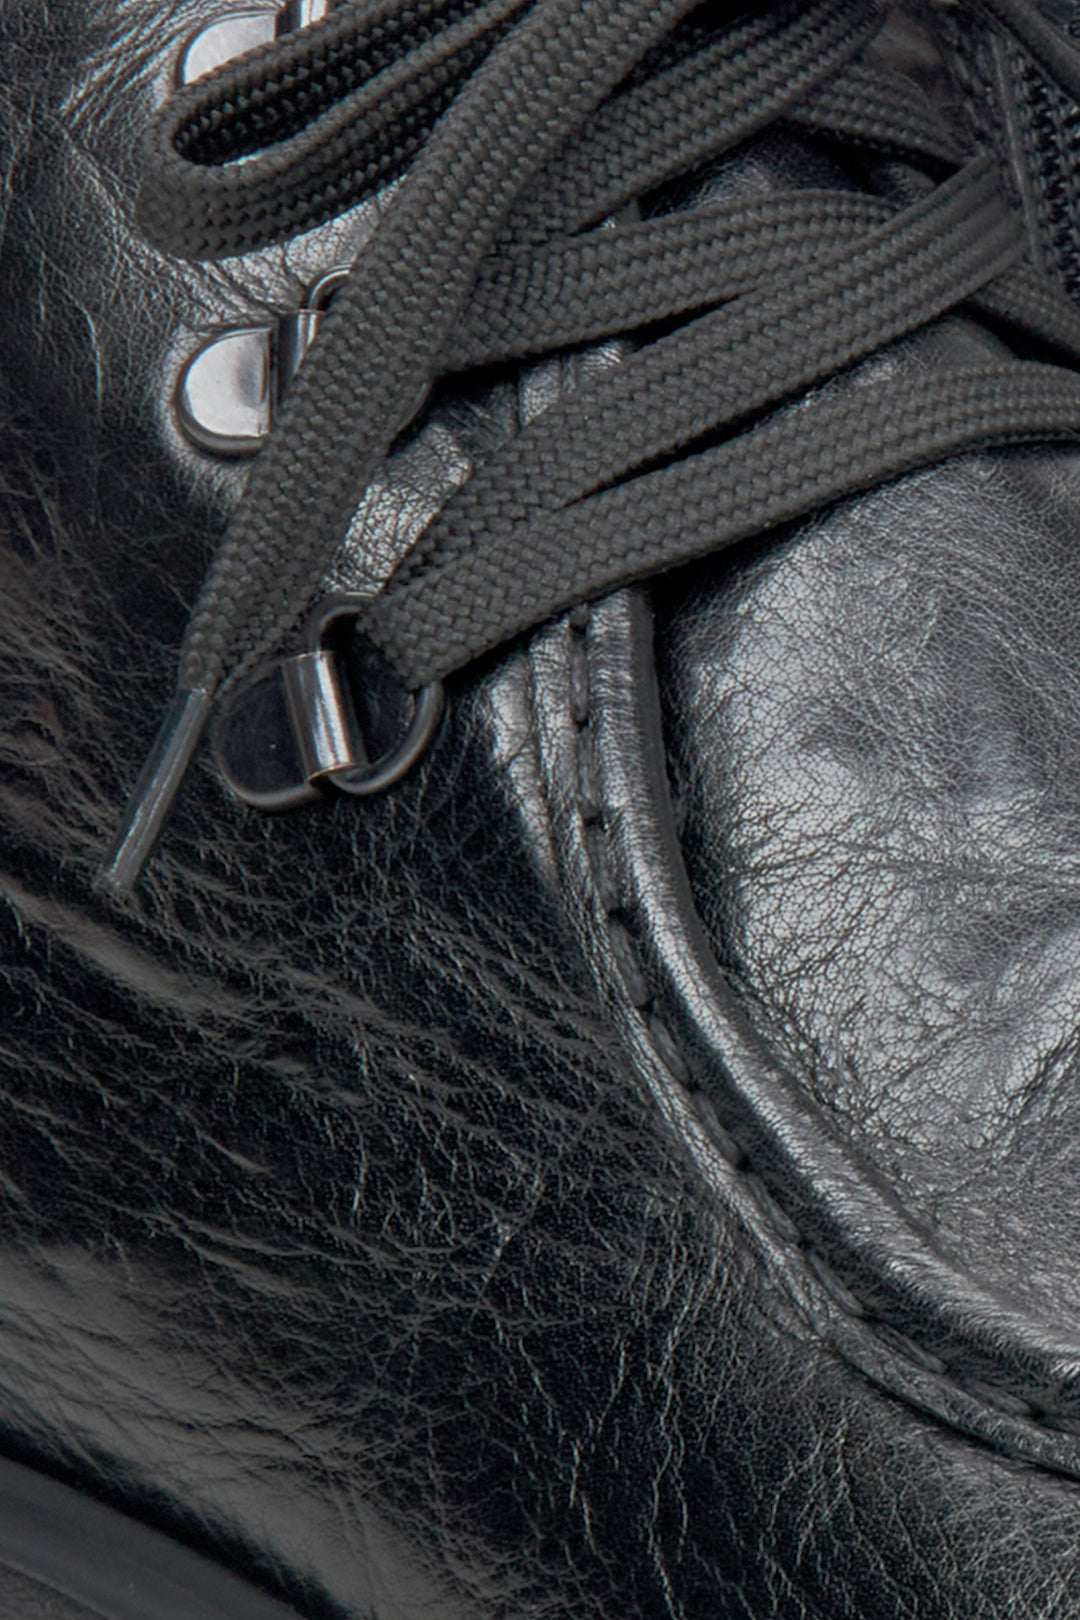 Men's black boots - close-up on the details.